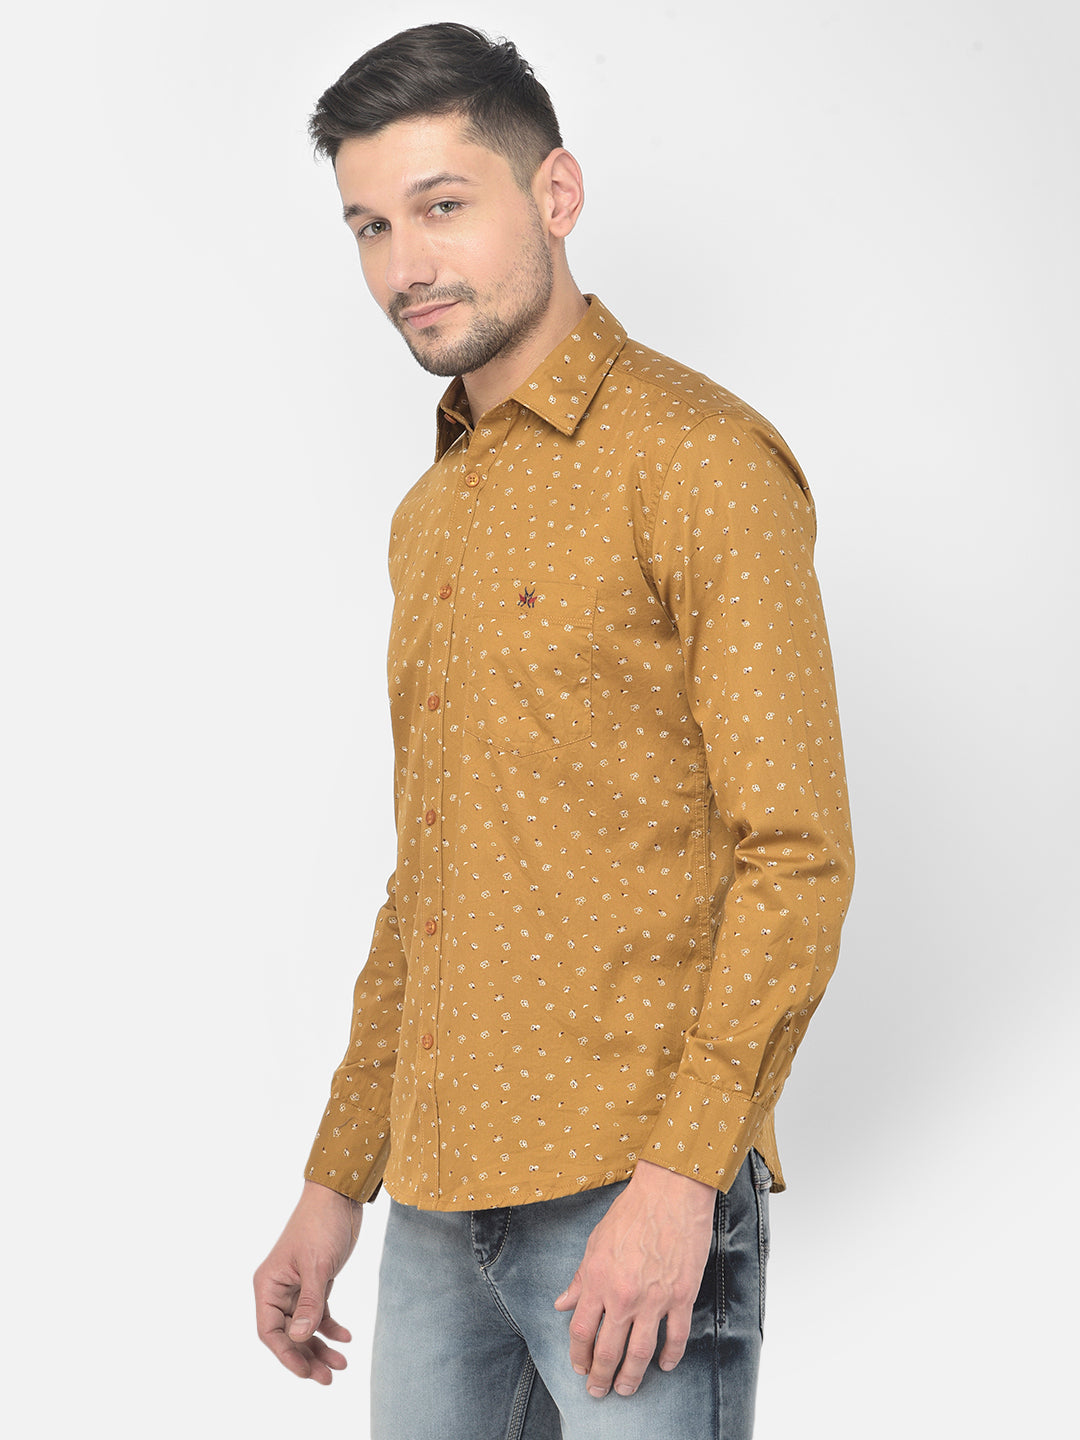 Mustard Printed Spread Collar Shirt - Men Shirts